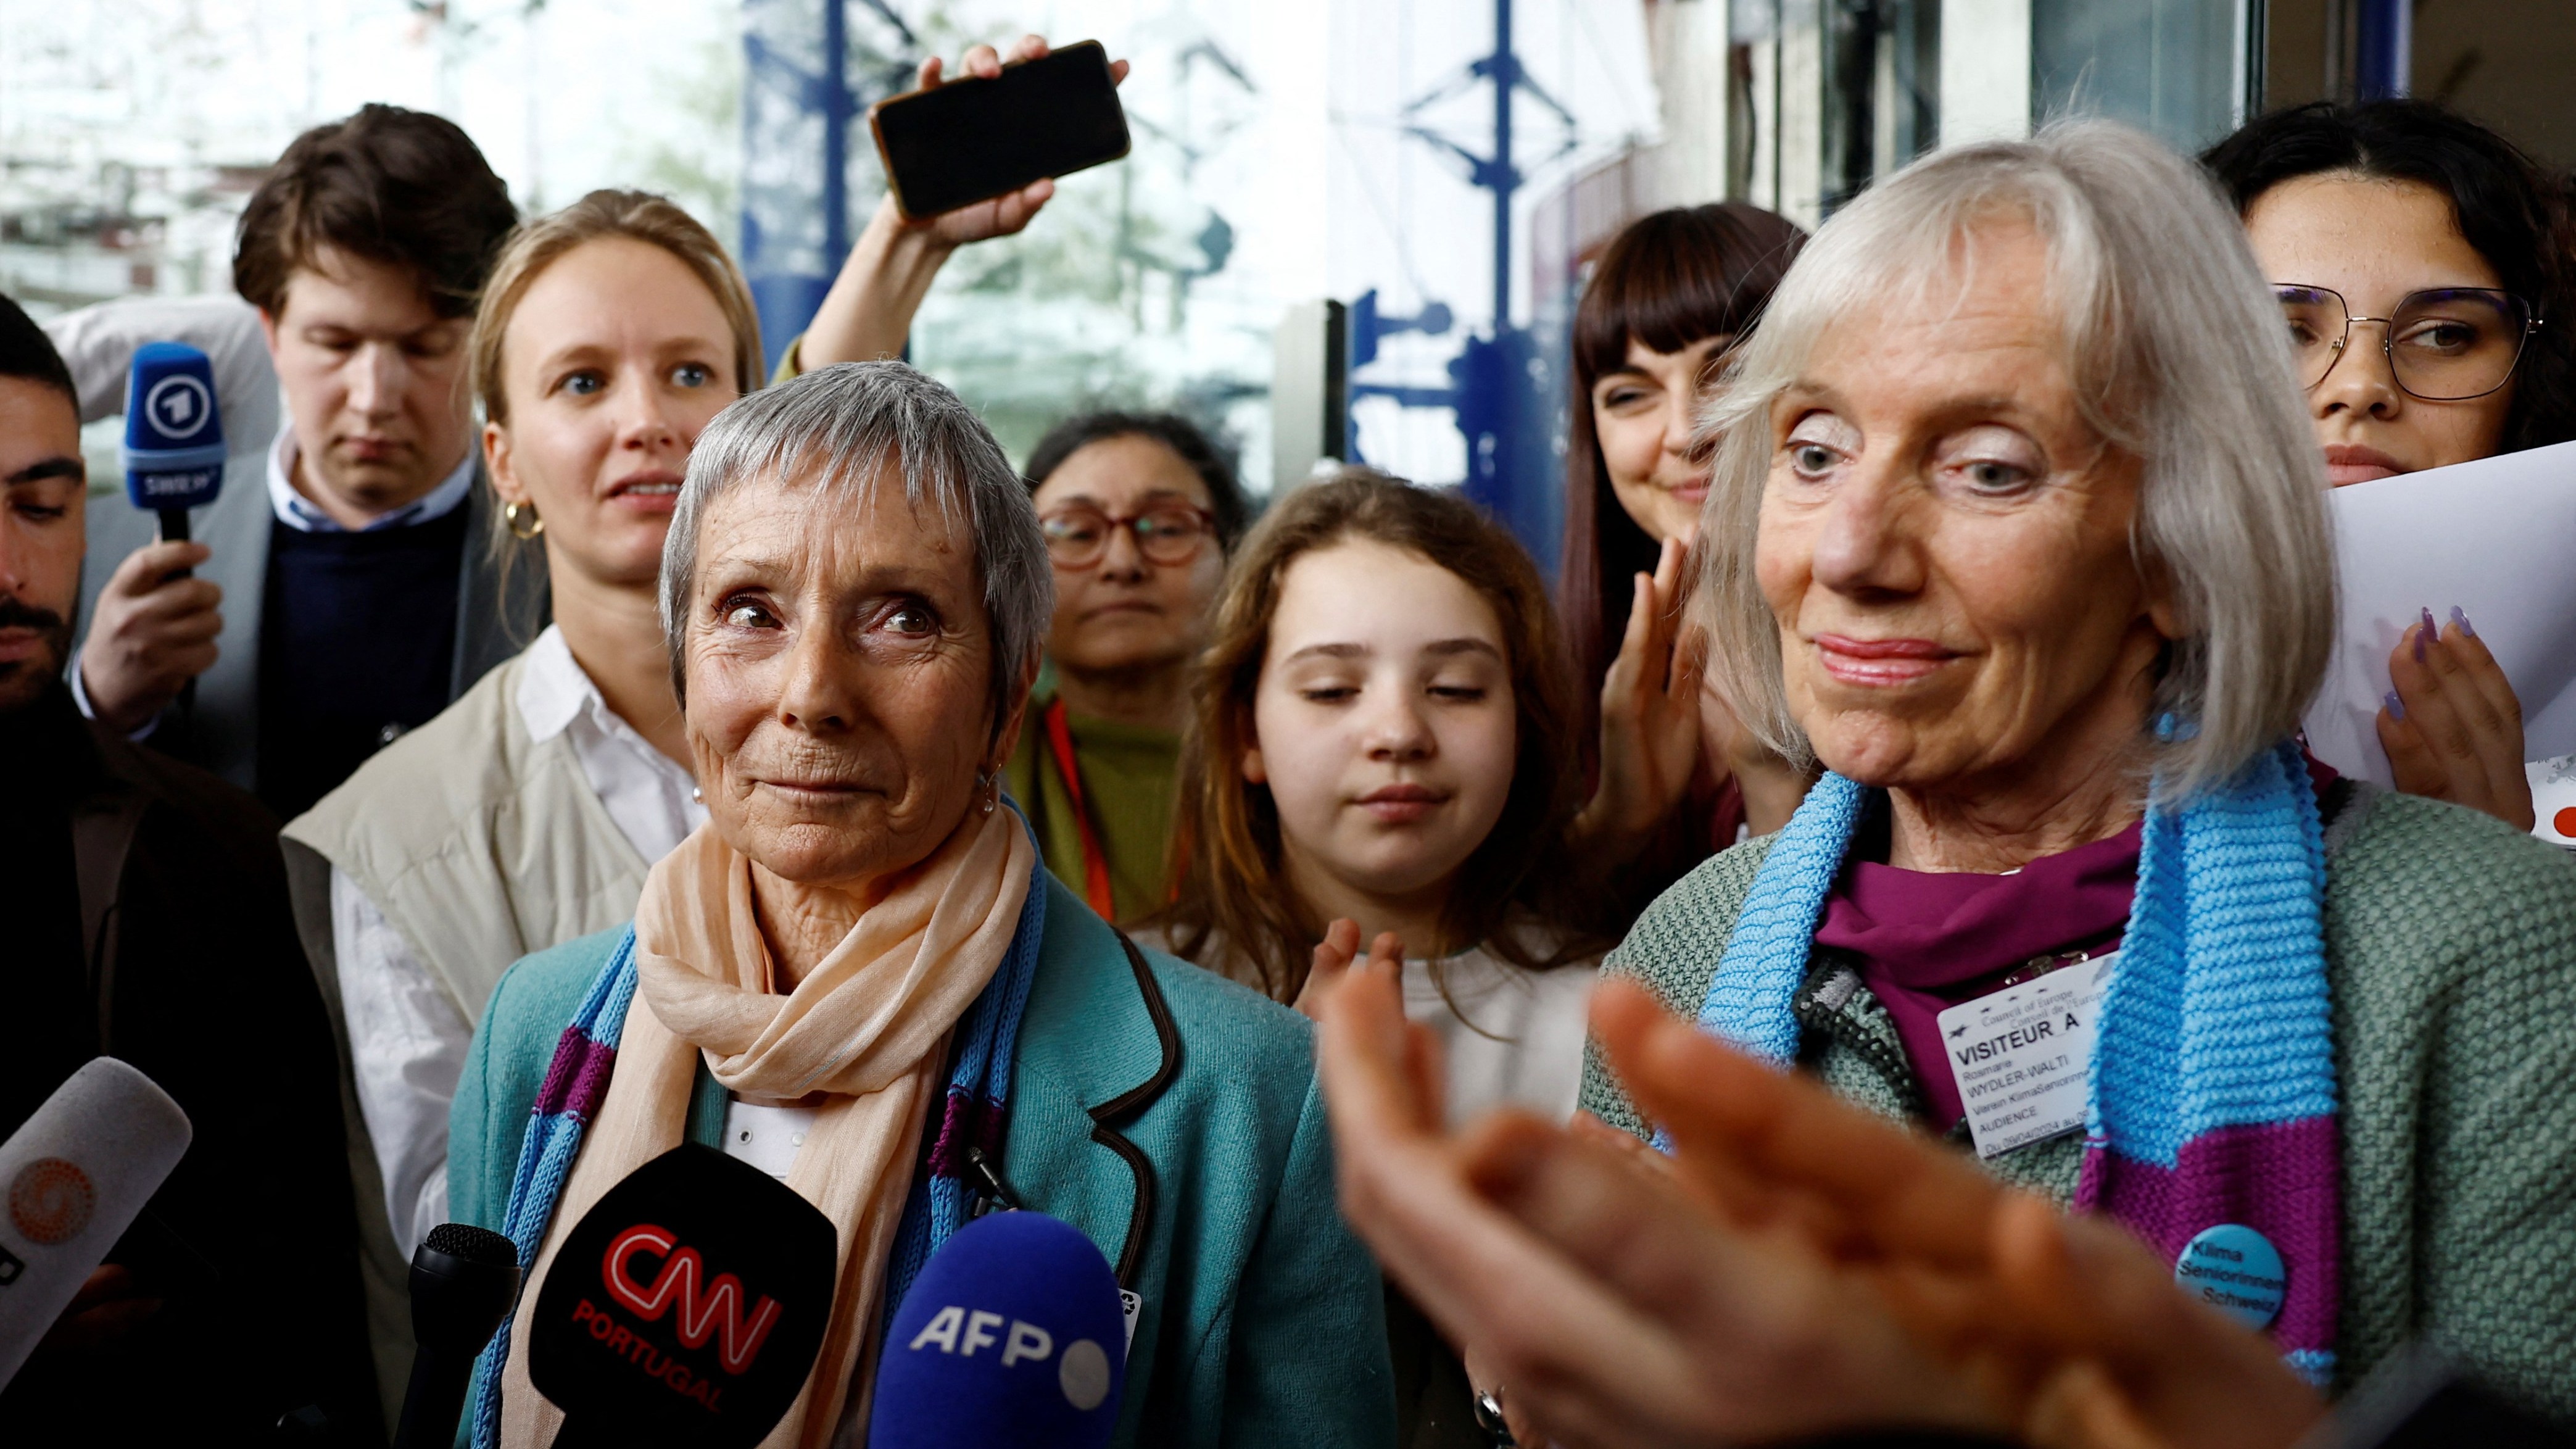 Band of female eco activists win landmark climate case